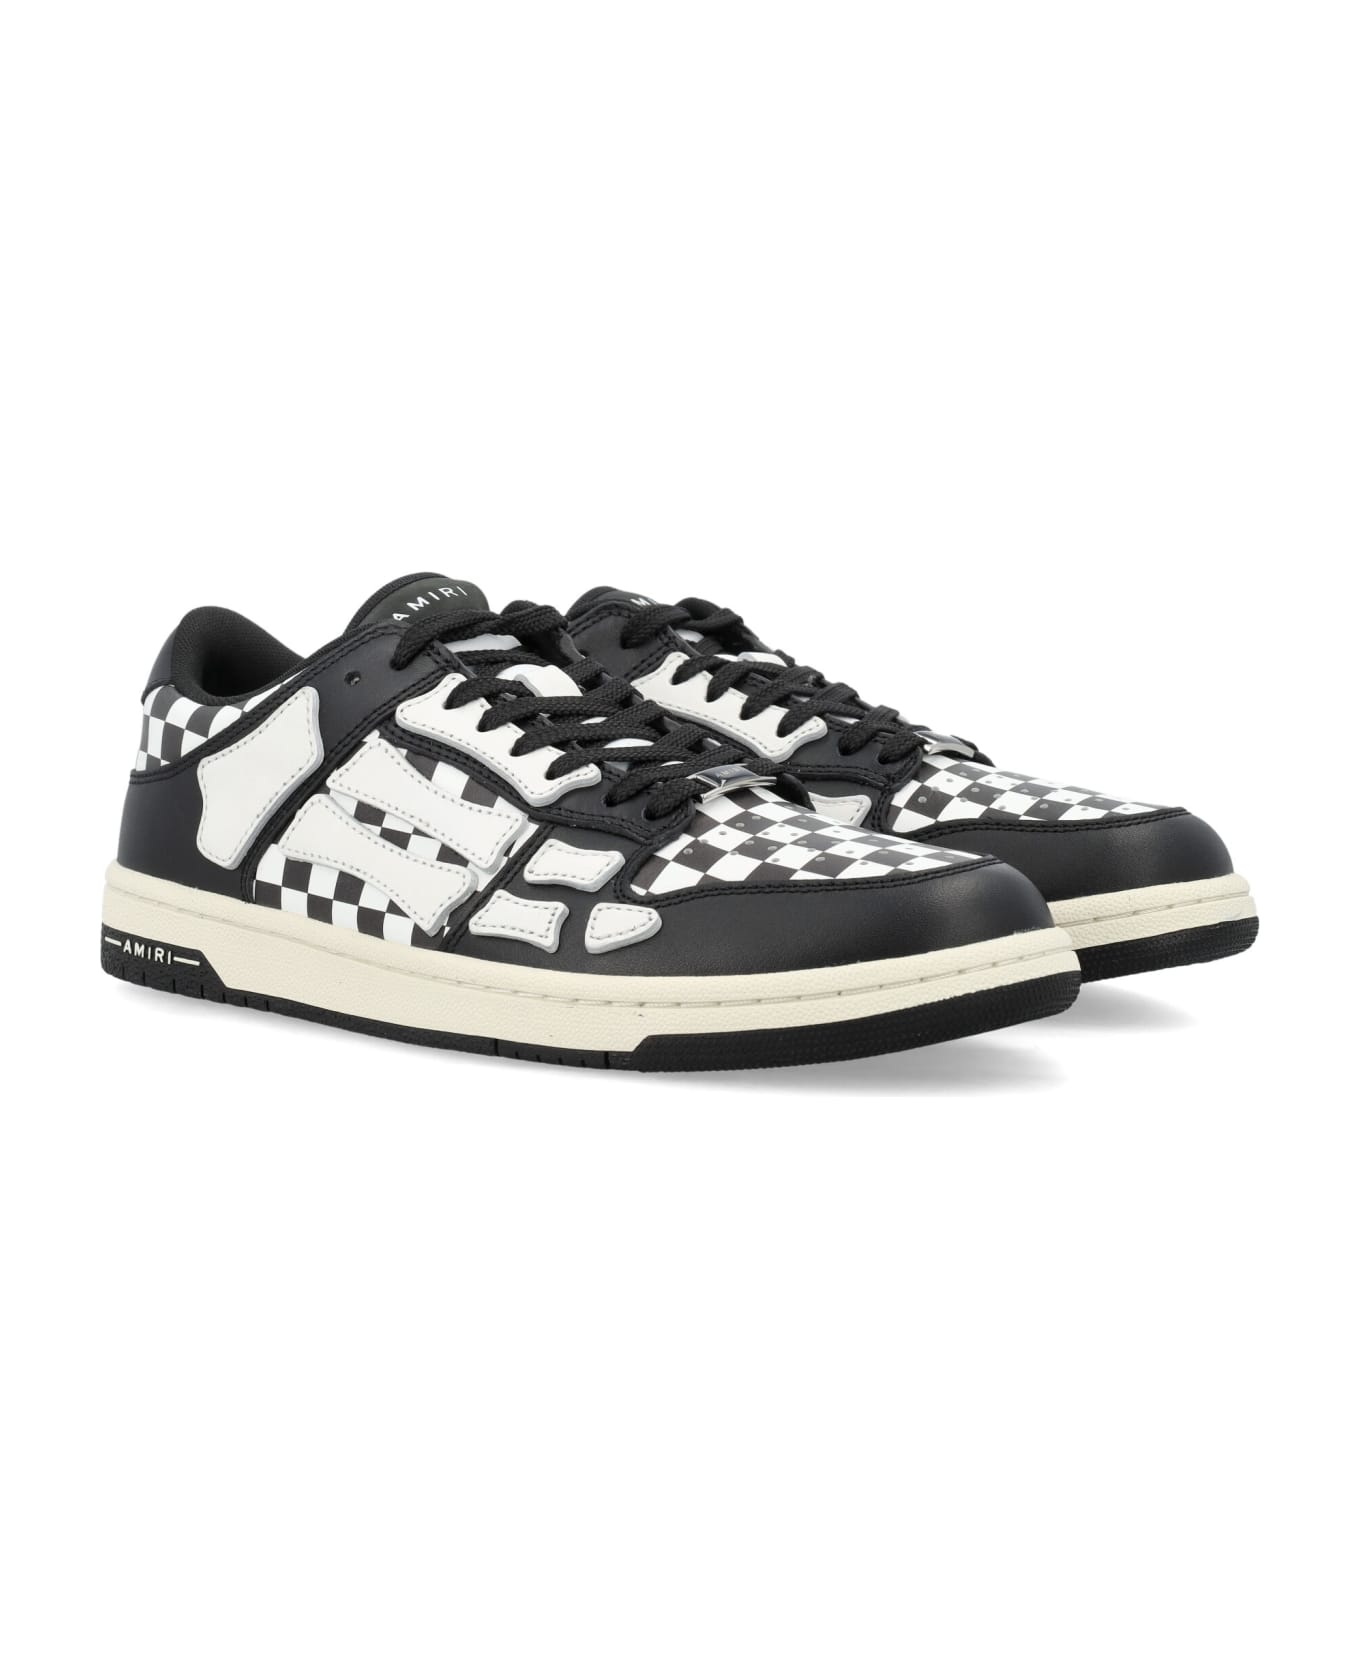 AMIRI Checkered Skel Top Low Sneakers - BLACK WHITE スニーカー